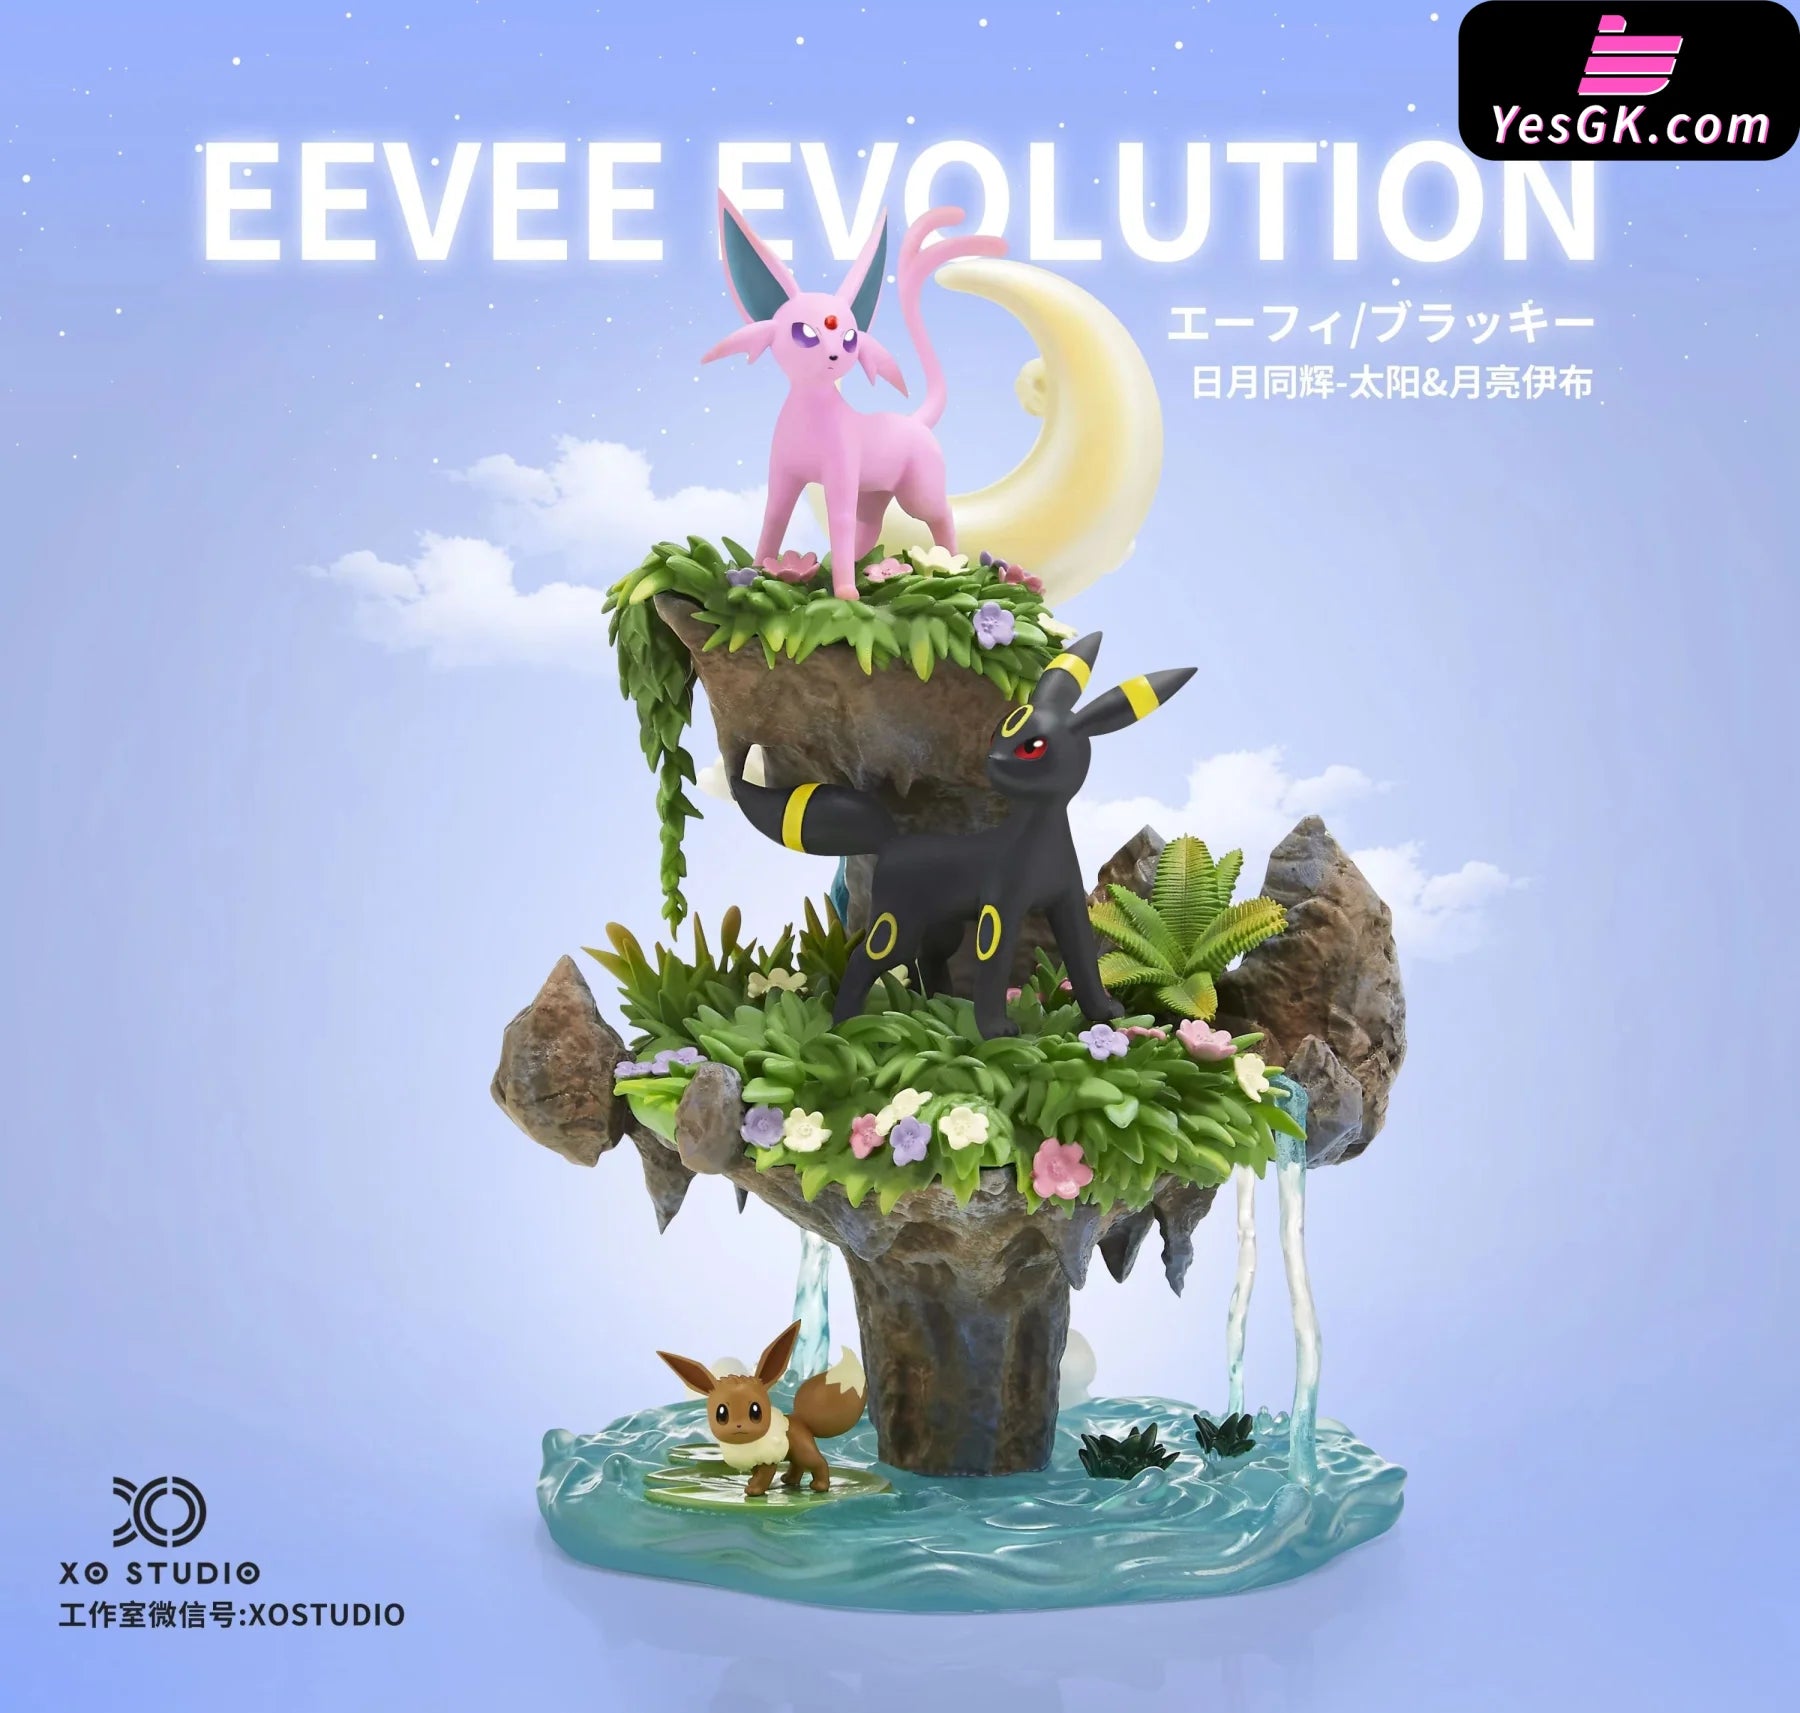 Eevee Family - Pokemon Resin Statue - PcHouse Studios [In Stock]